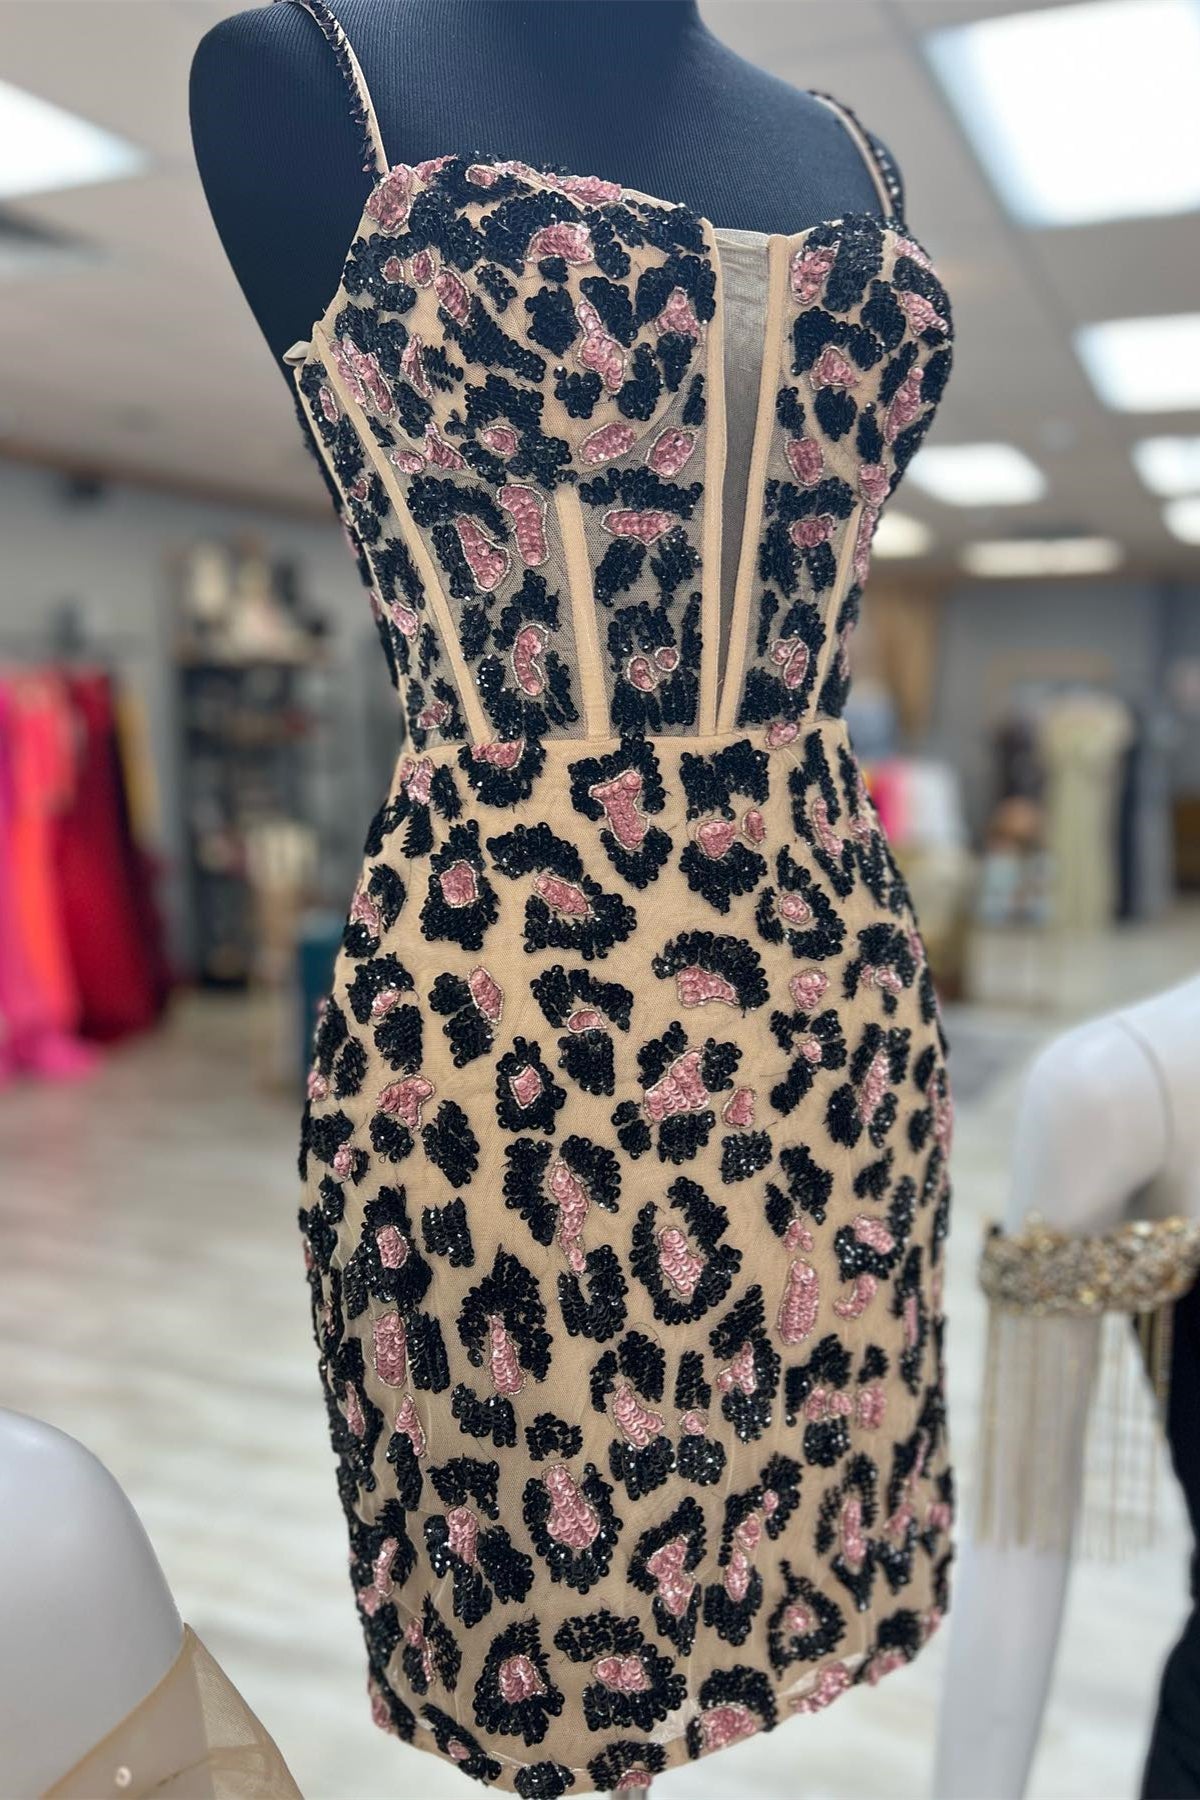 Leopard Print Sheath Straps Homecoming Dress